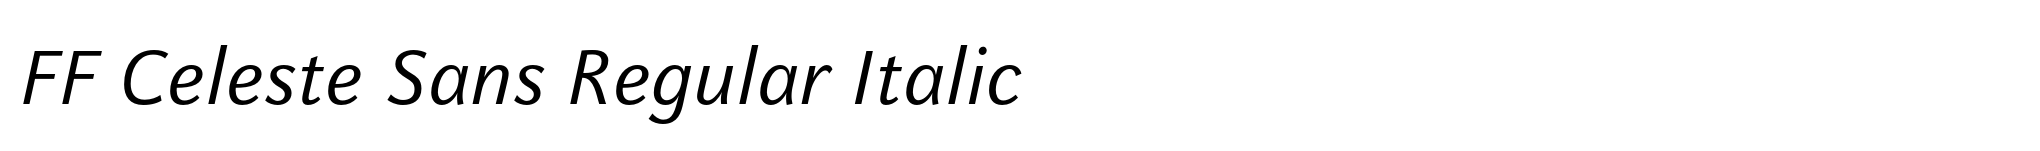 FF Celeste Sans Regular Italic image